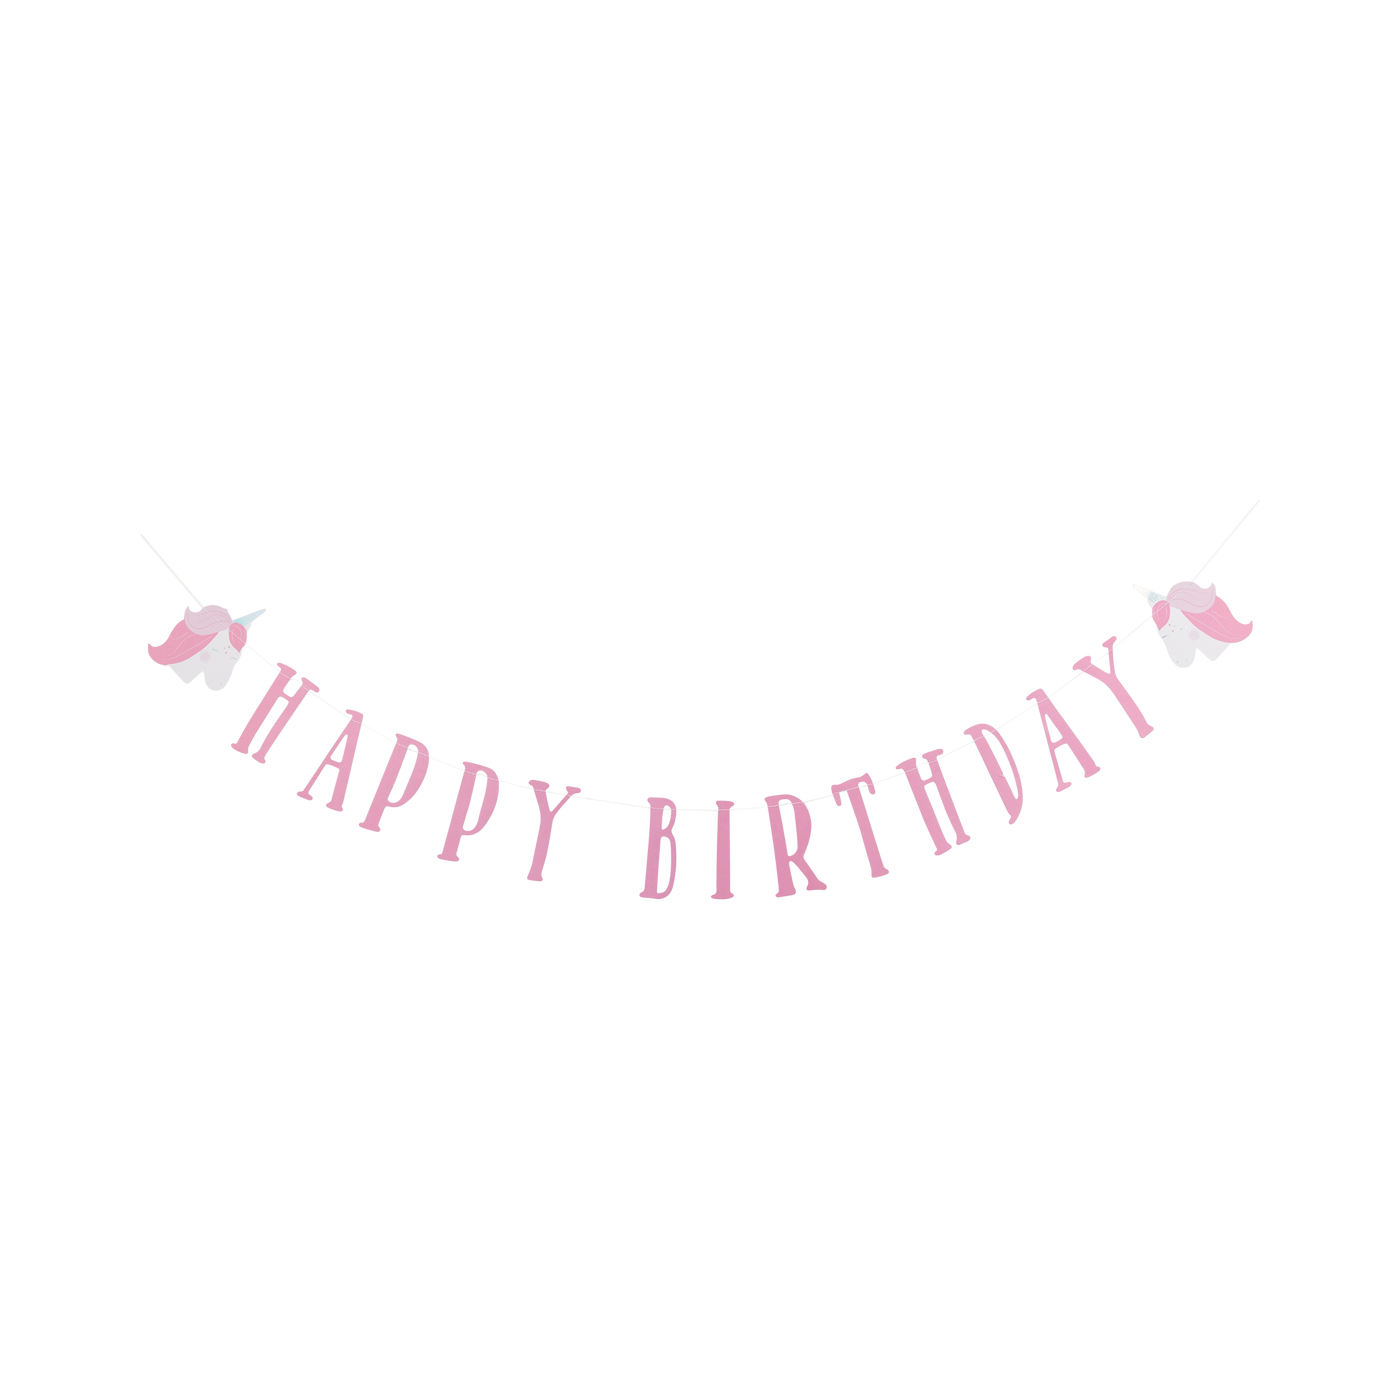 PLPKU03 - Pink Unicorn Happy Birthday Banner